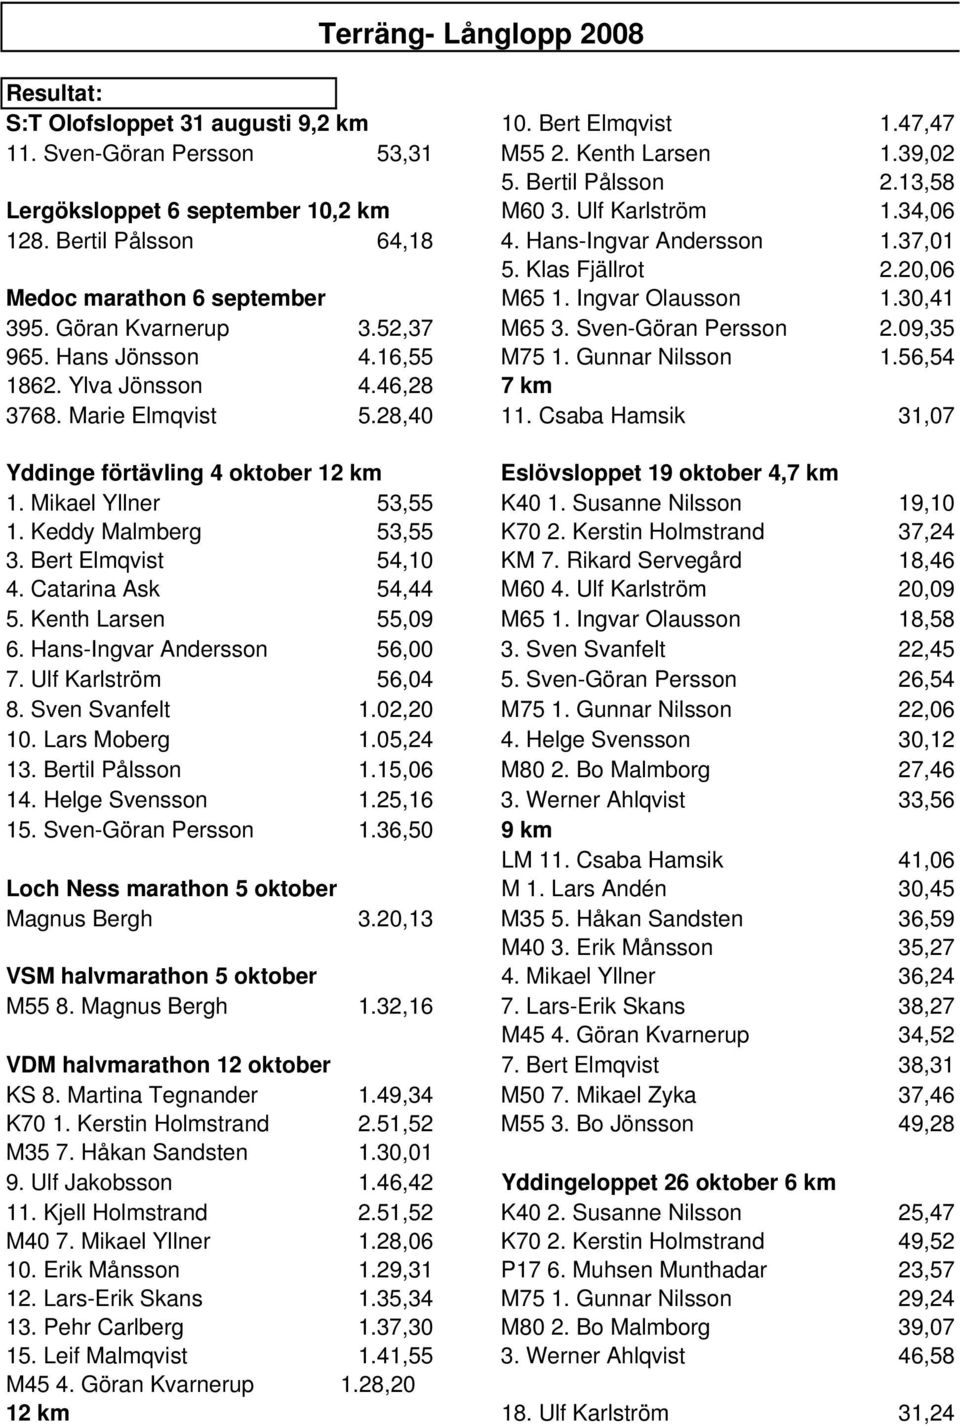 Ingvar Olausson 1.30,41 395. Göran Kvarnerup 3.52,37 M65 3. Sven-Göran Persson 2.09,35 965. Hans Jönsson 4.16,55 M75 1. Gunnar Nilsson 1.56,54 1862. Ylva Jönsson 4.46,28 7 km 3768. Marie Elmqvist 5.